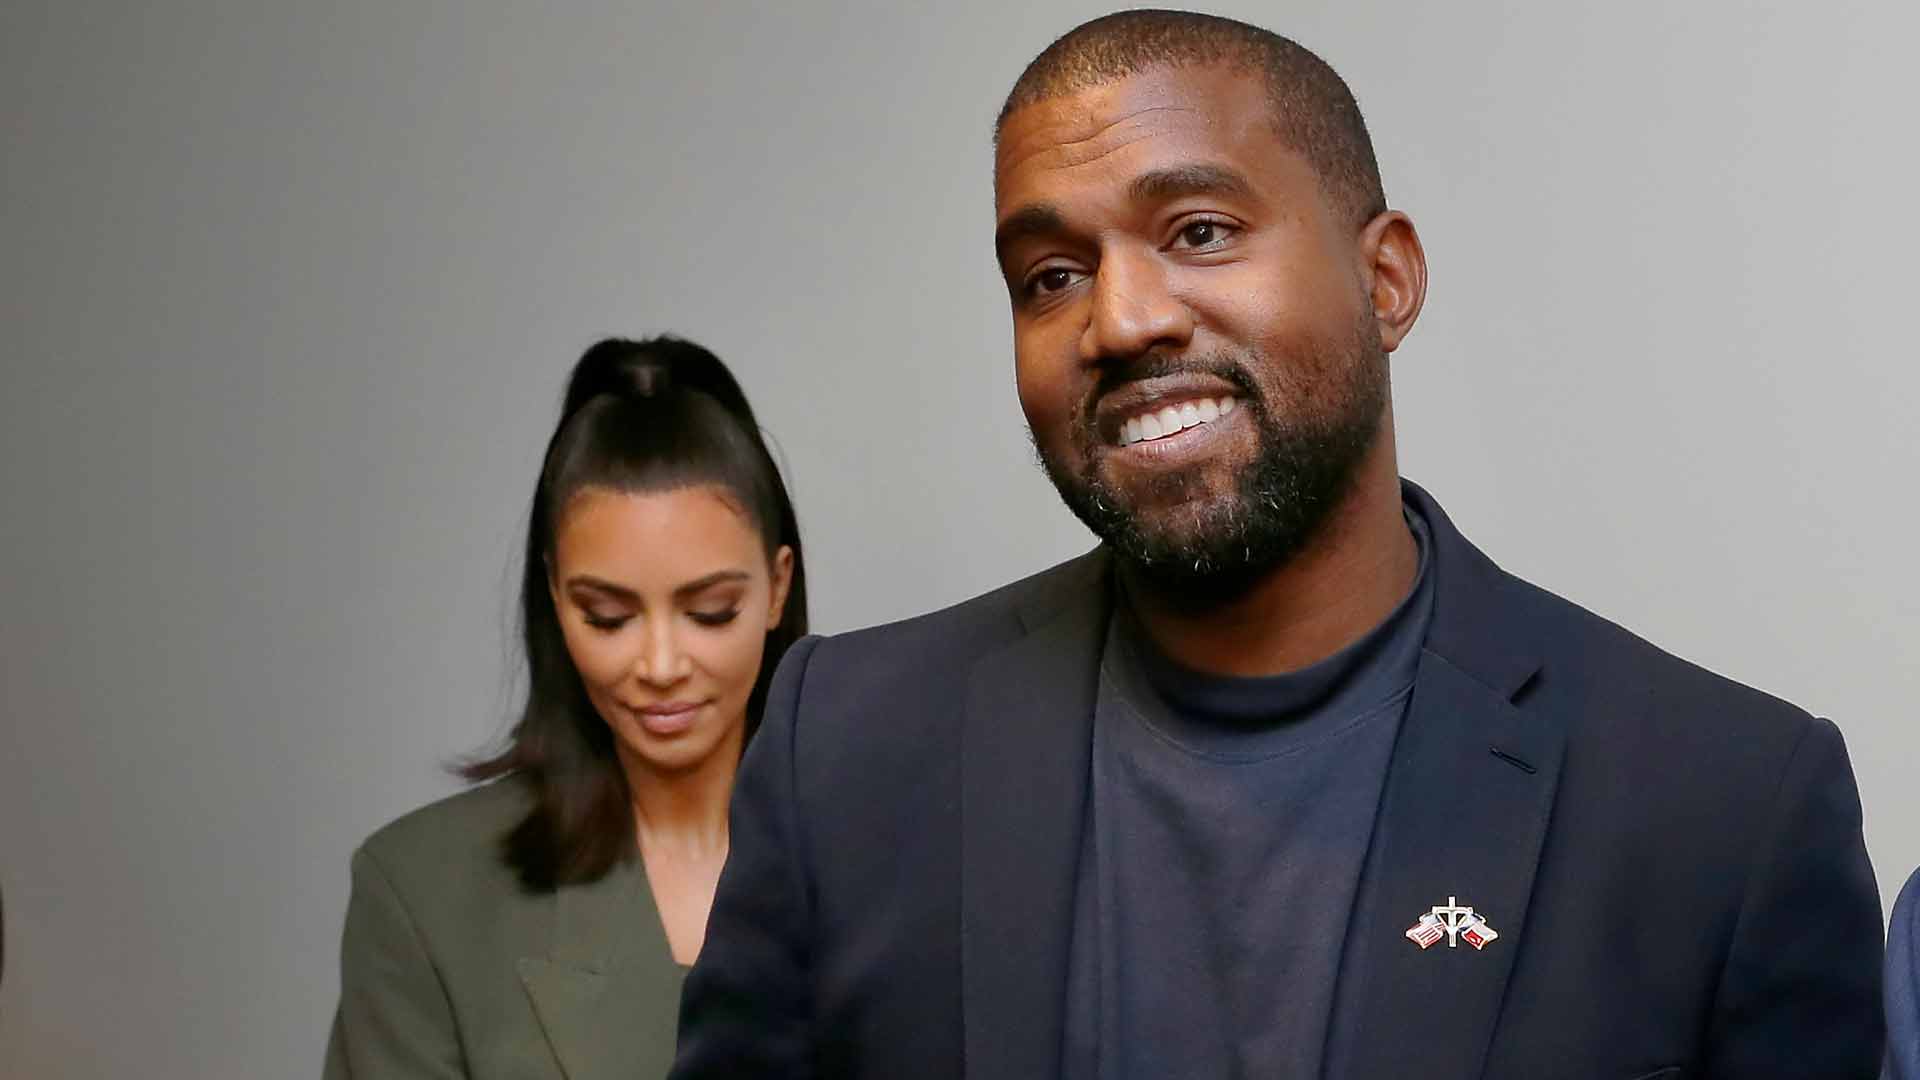 Kanye-West-Kim-Kardashian